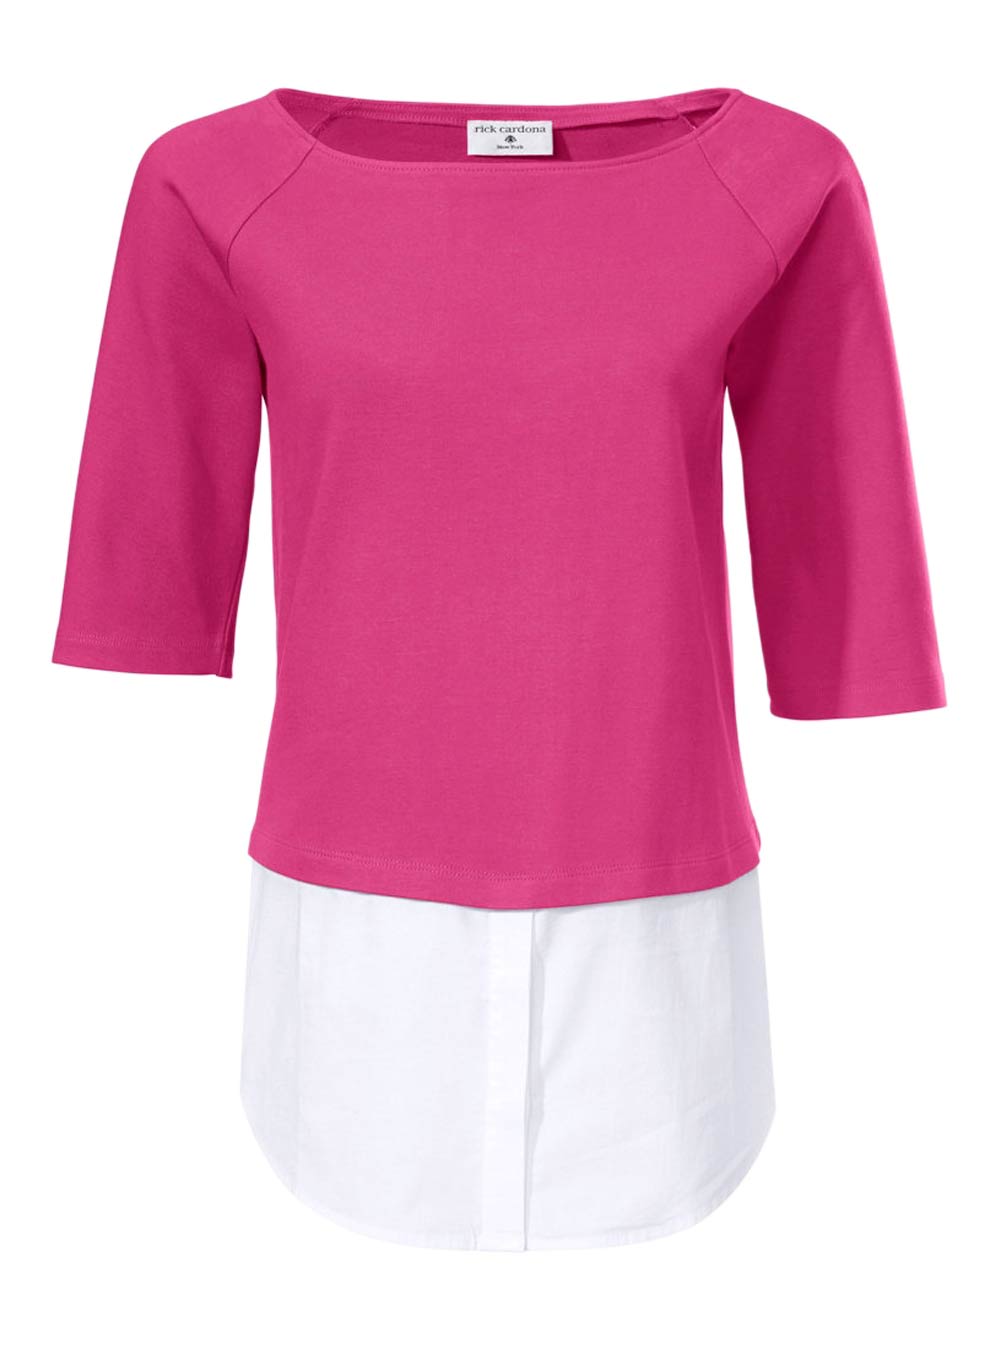 Rick Cardona Damen Designer-Pullover-2-in-1, pink-weiß